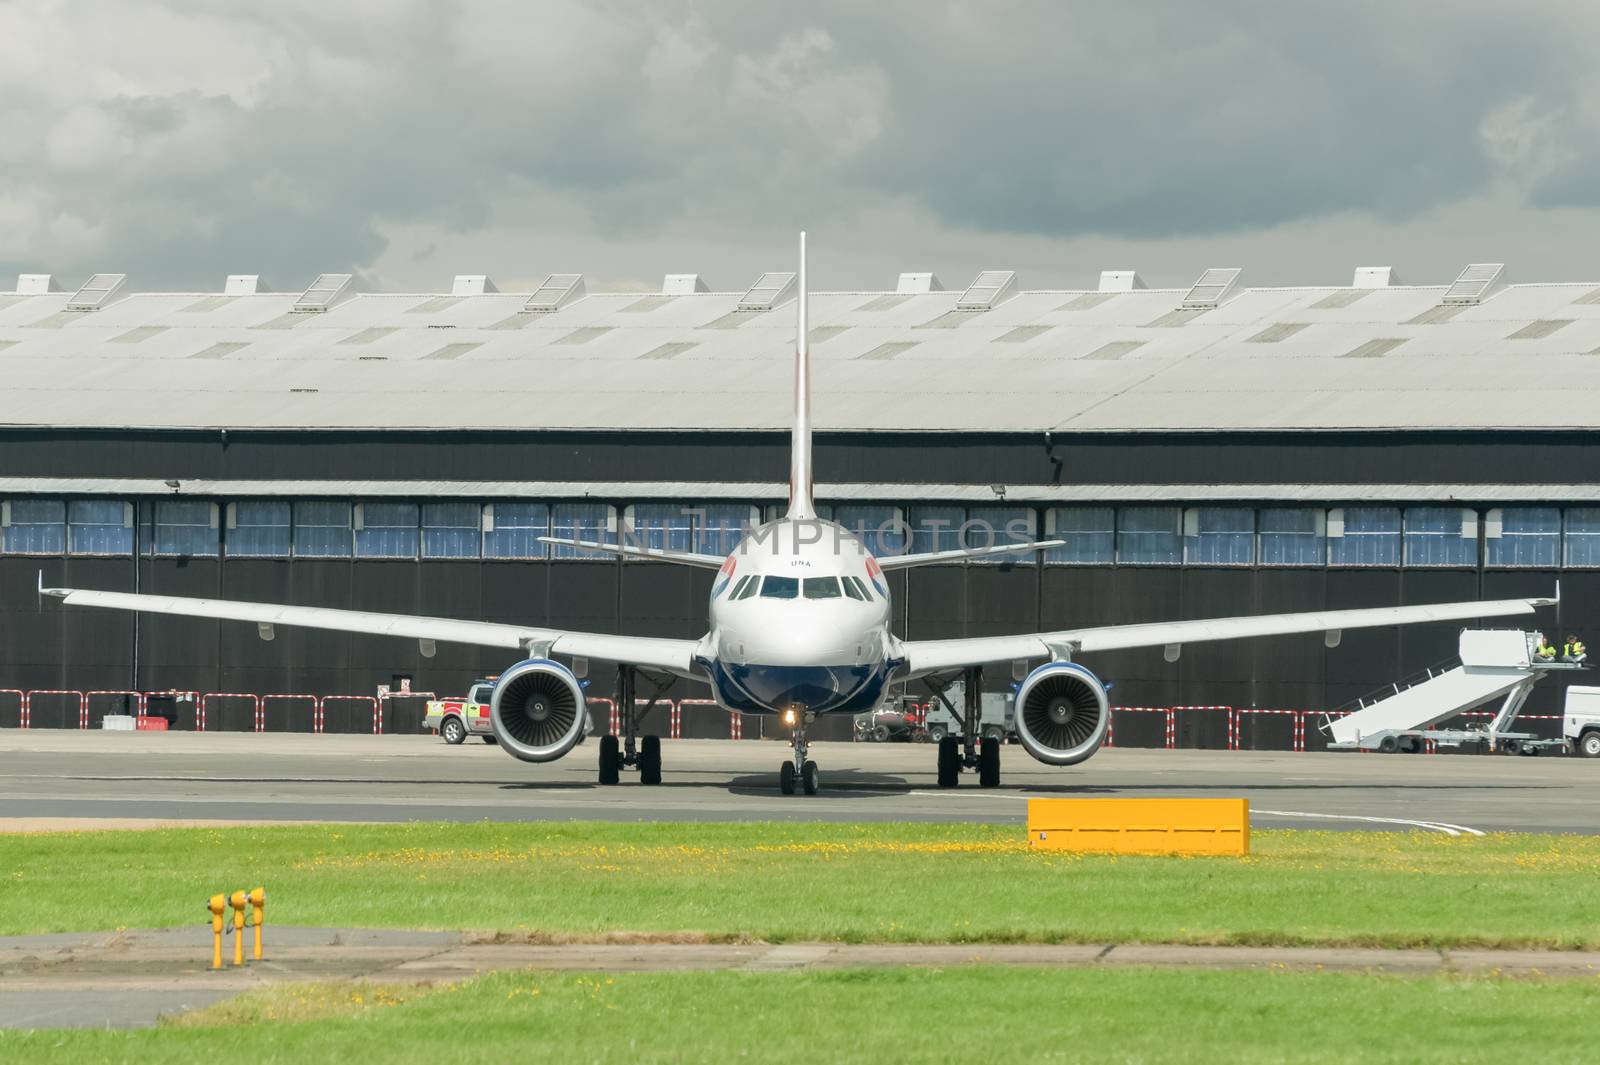 Farnborough, UK - July 15, 2012: British Airways Airbus A318 taxiing before take-off at the Farnborough Airshow, UK